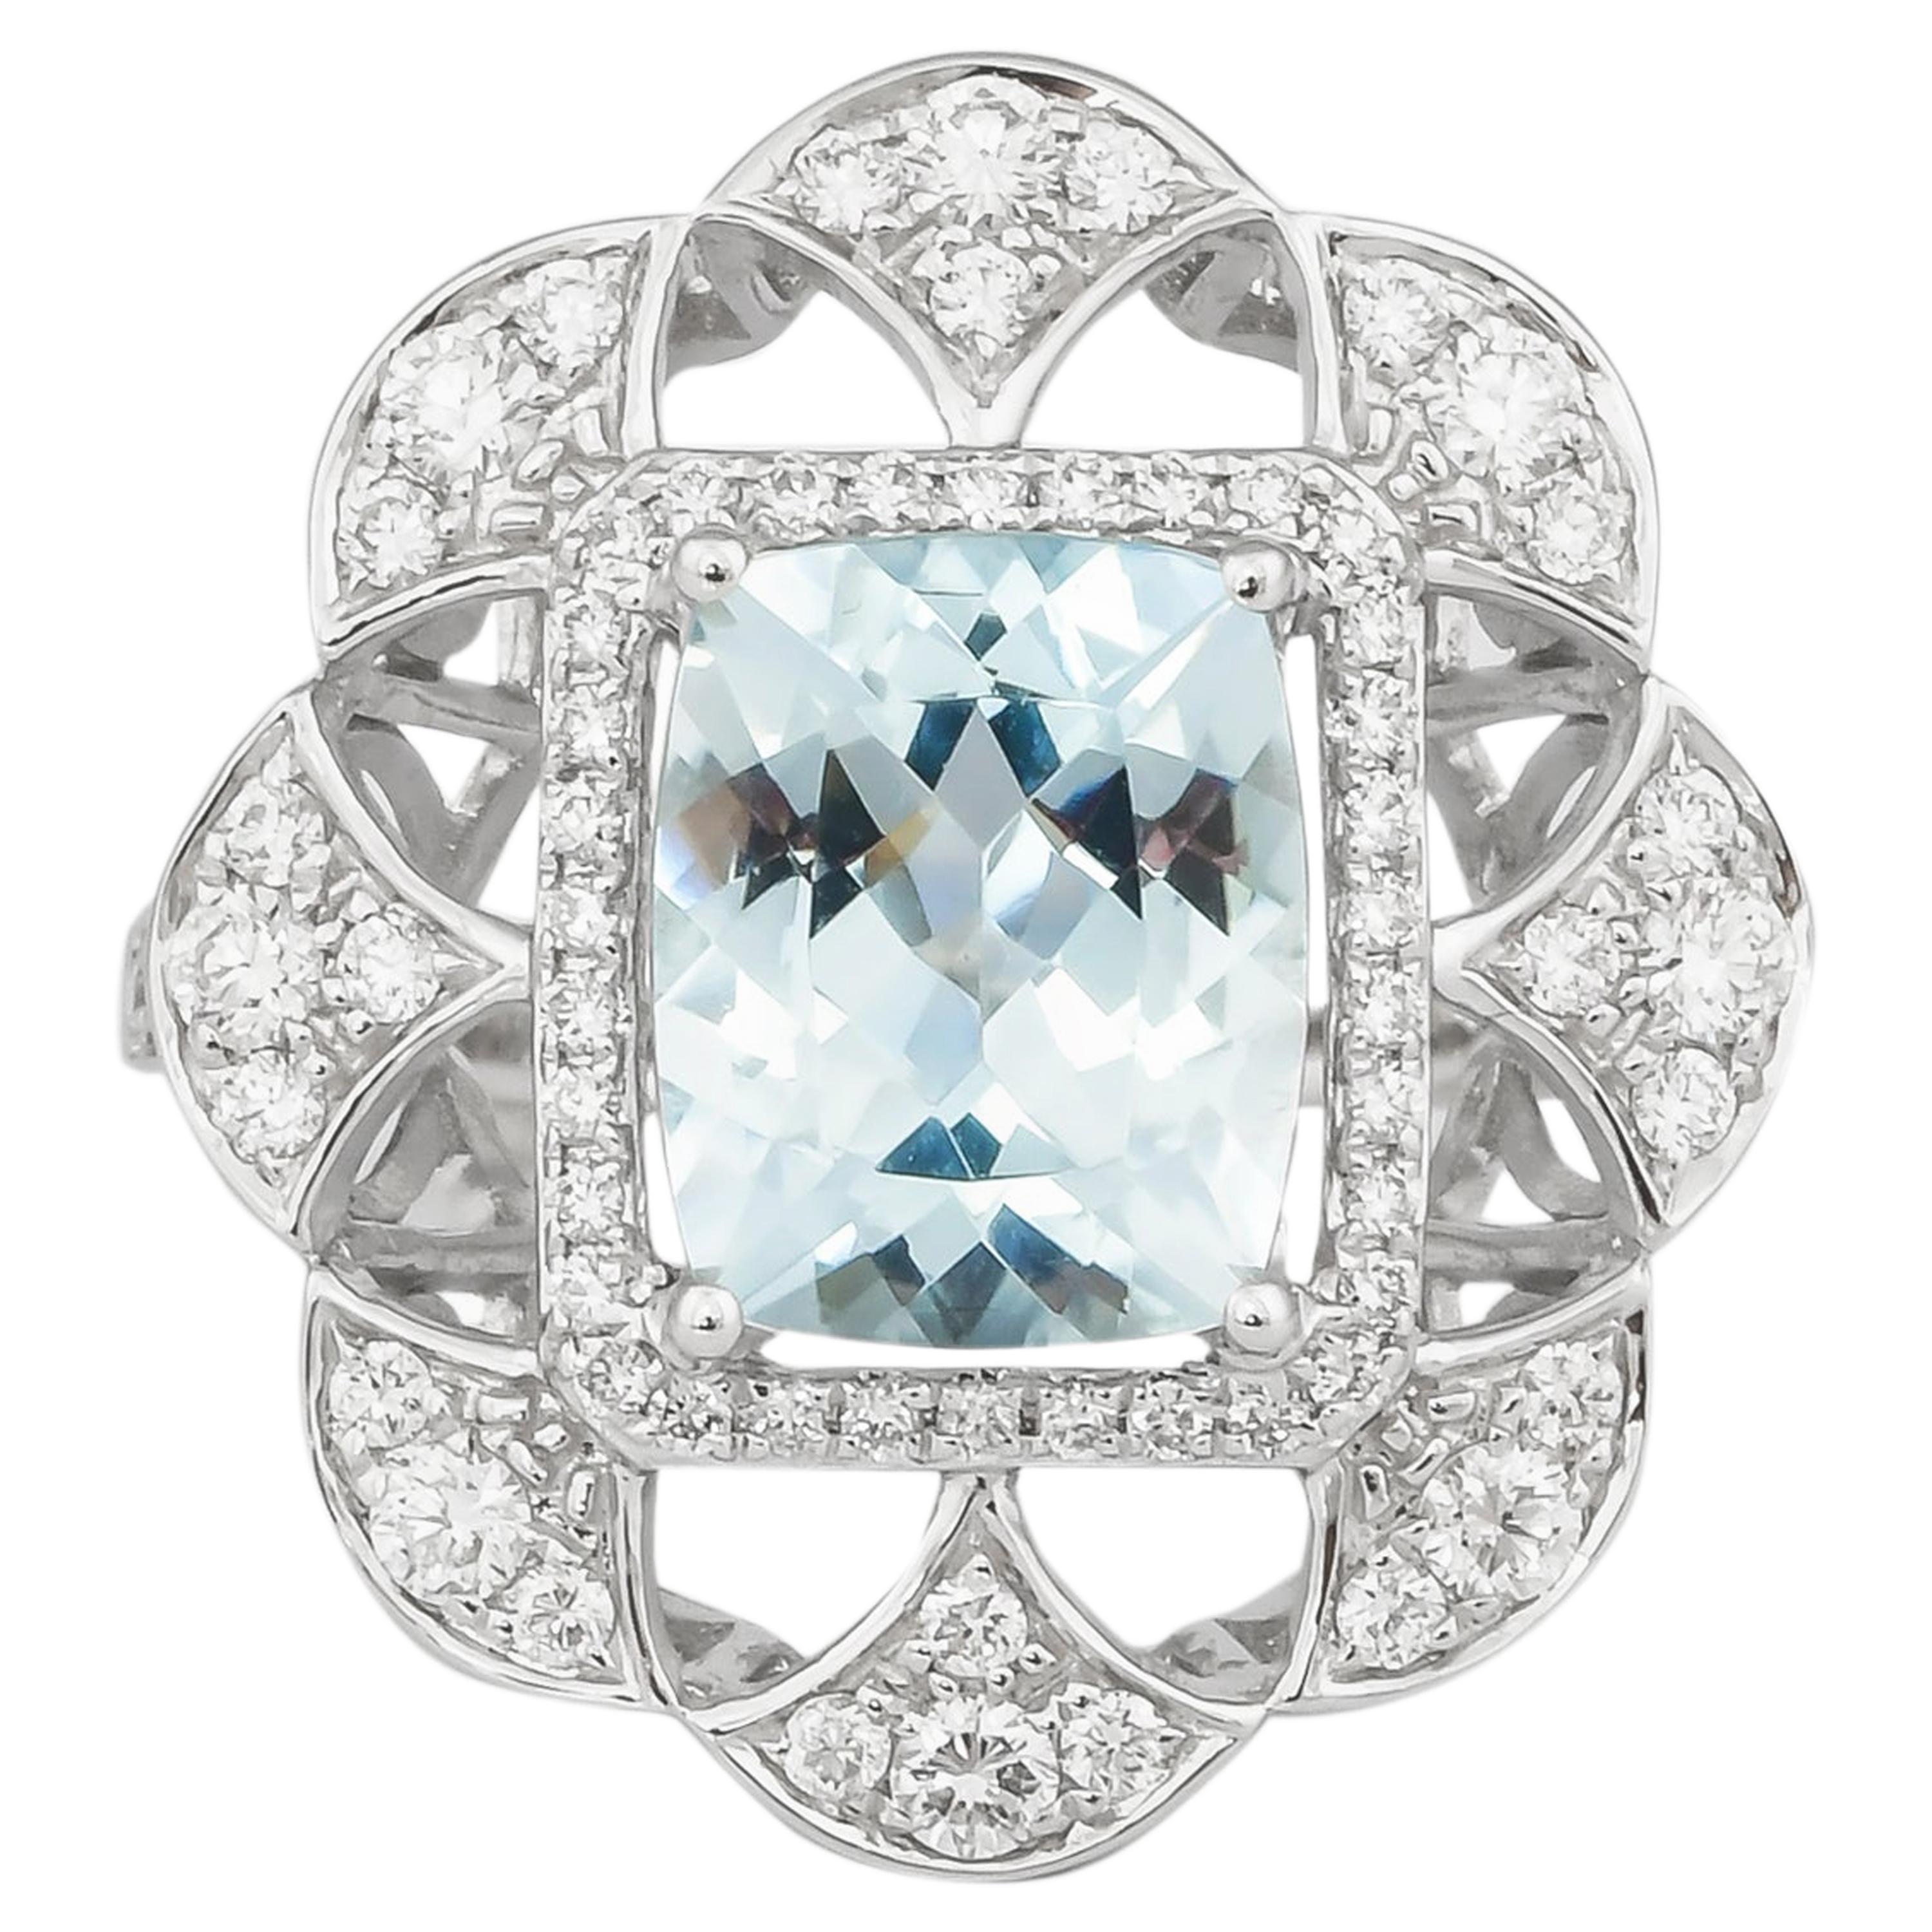 2.4 Carat Aquamarine and Diamond Ring in 18 Karat White Gold For Sale